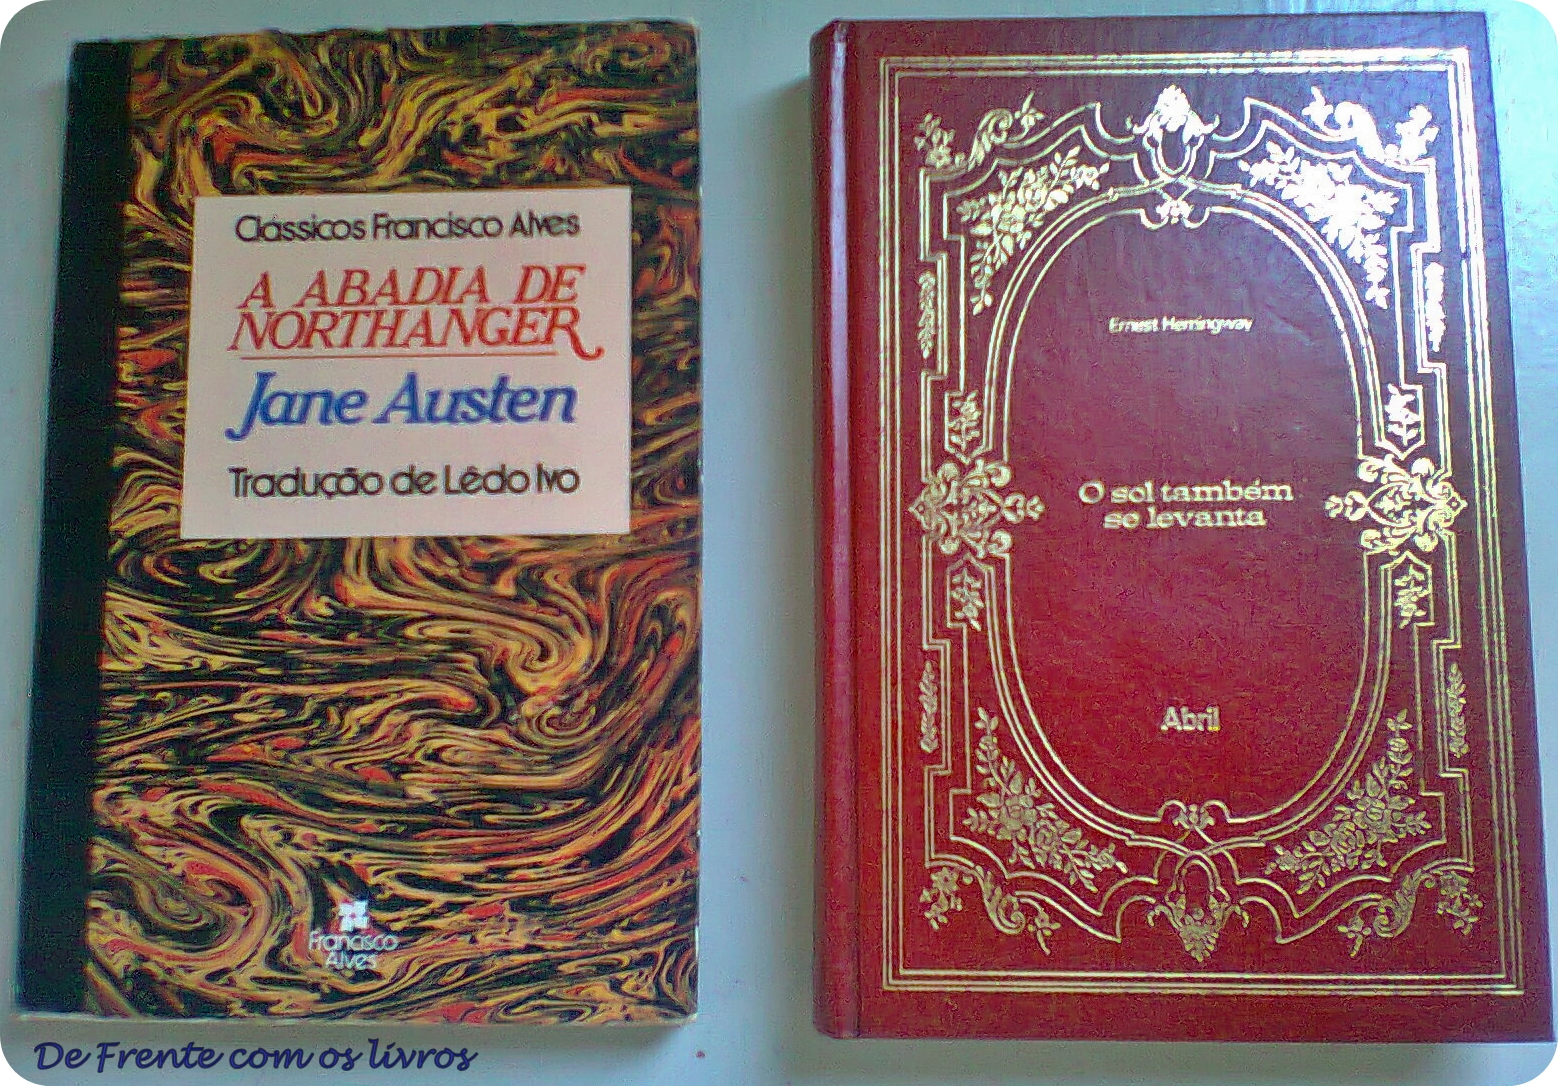 Jane Austen e Ernest Hemingway